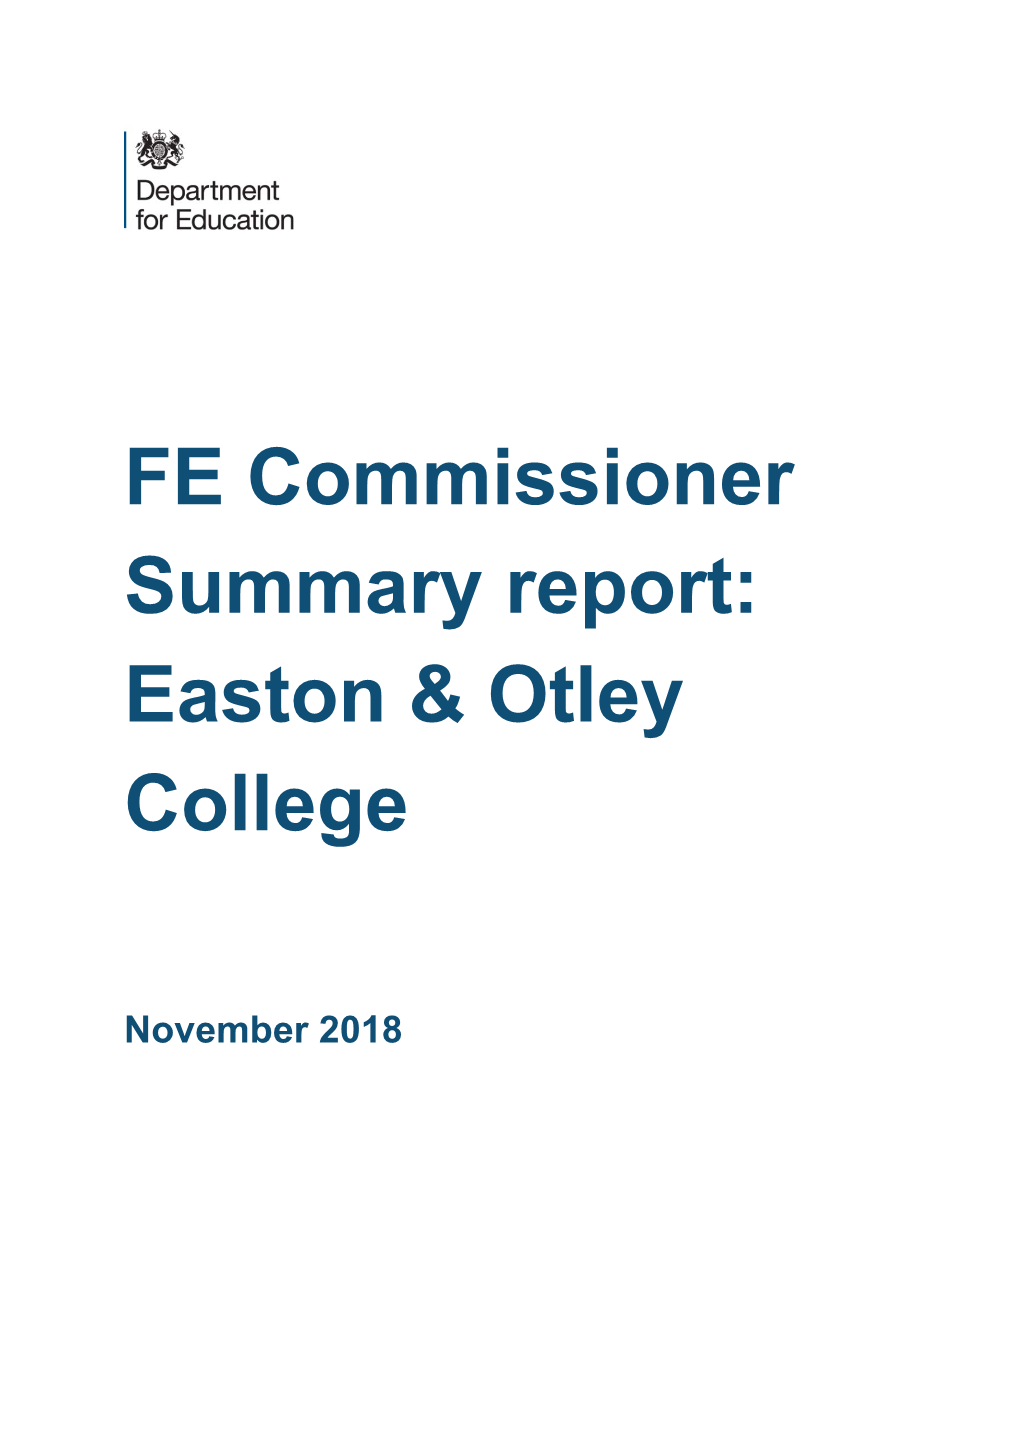 FE Commissioner Summary Report: Easton & Otley College